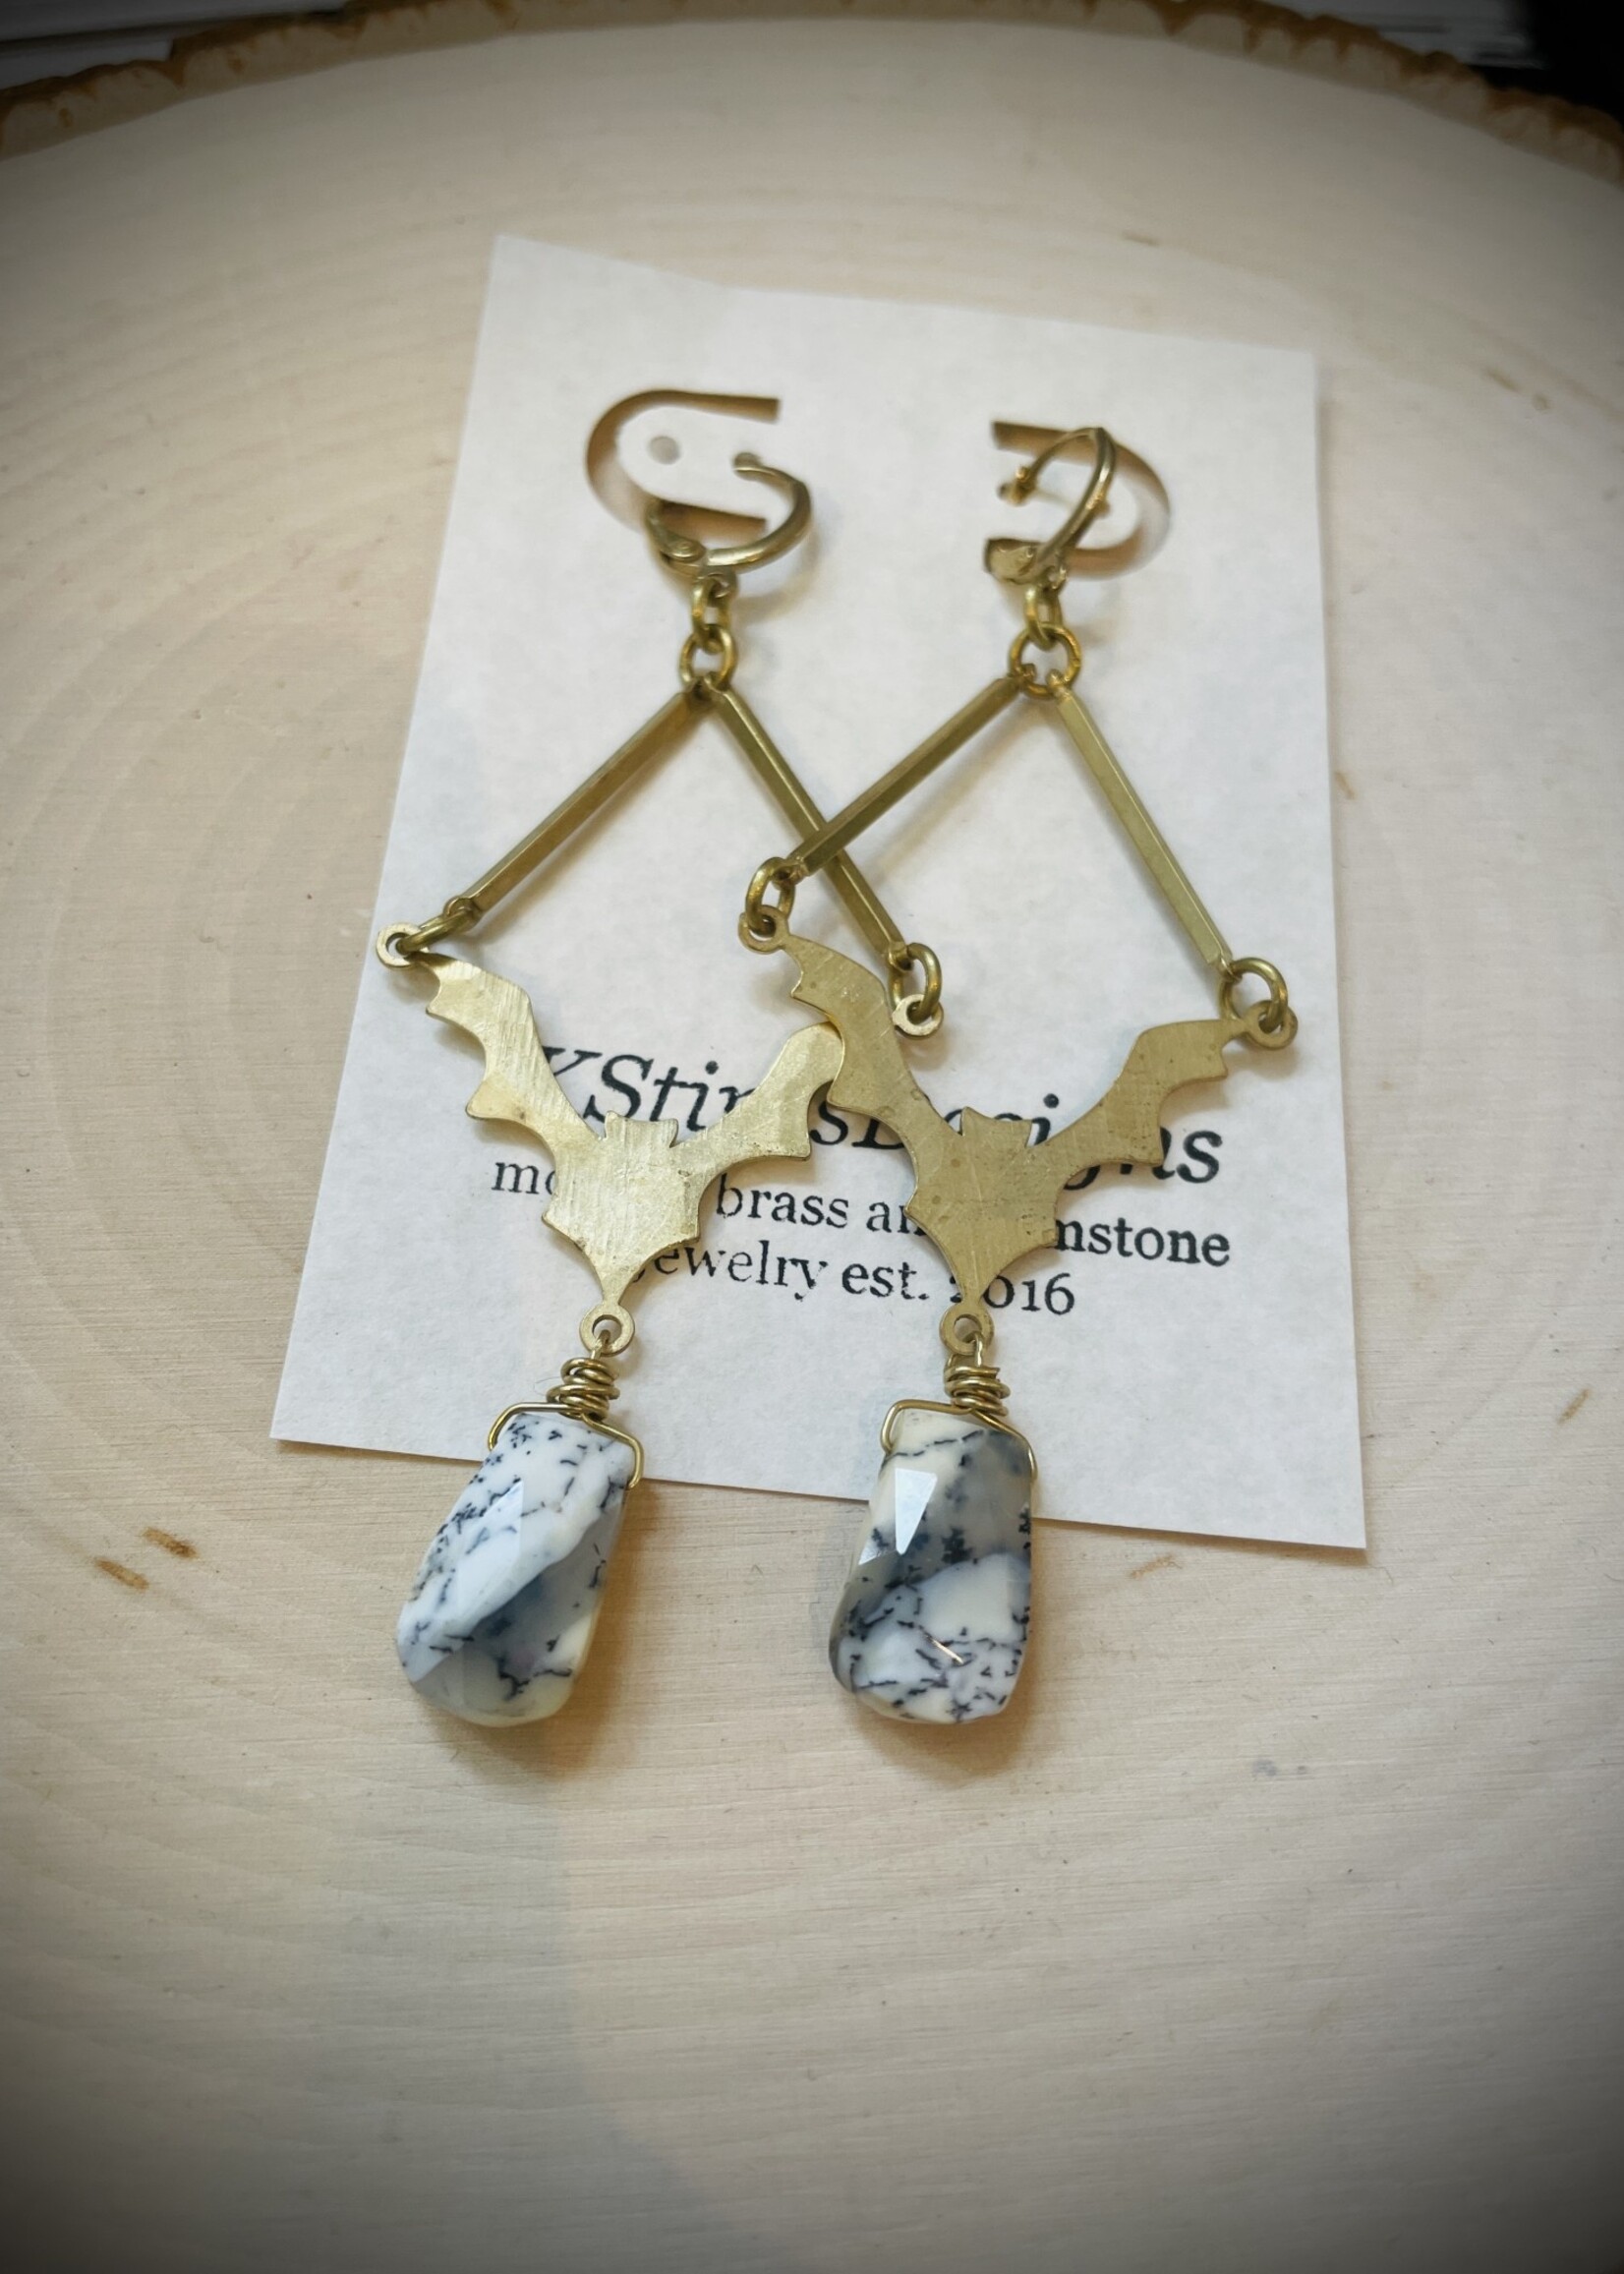 KStires Designs Brass Dendritic Opal Bat Earrings